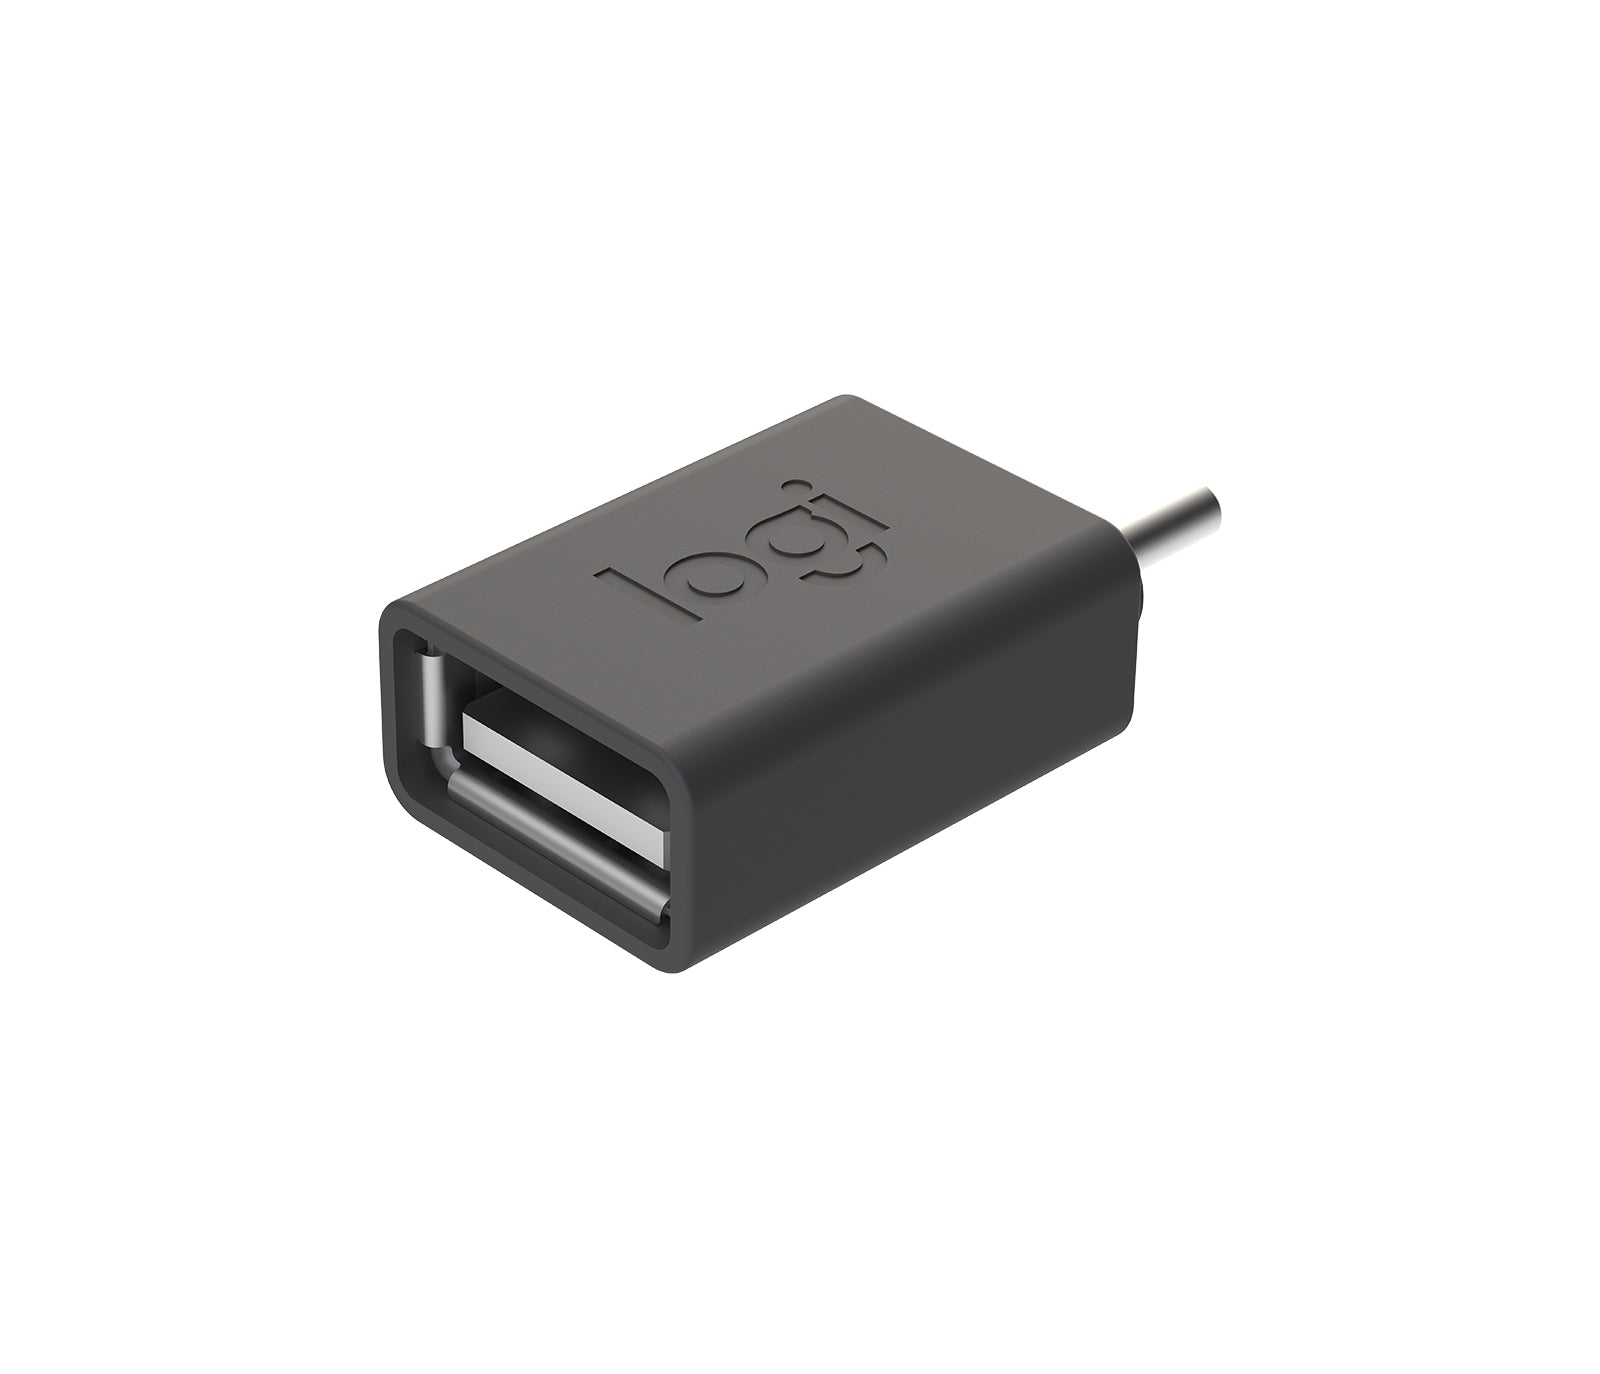 Logitech 956-000029 cable gender changer USB C USB A Black-1